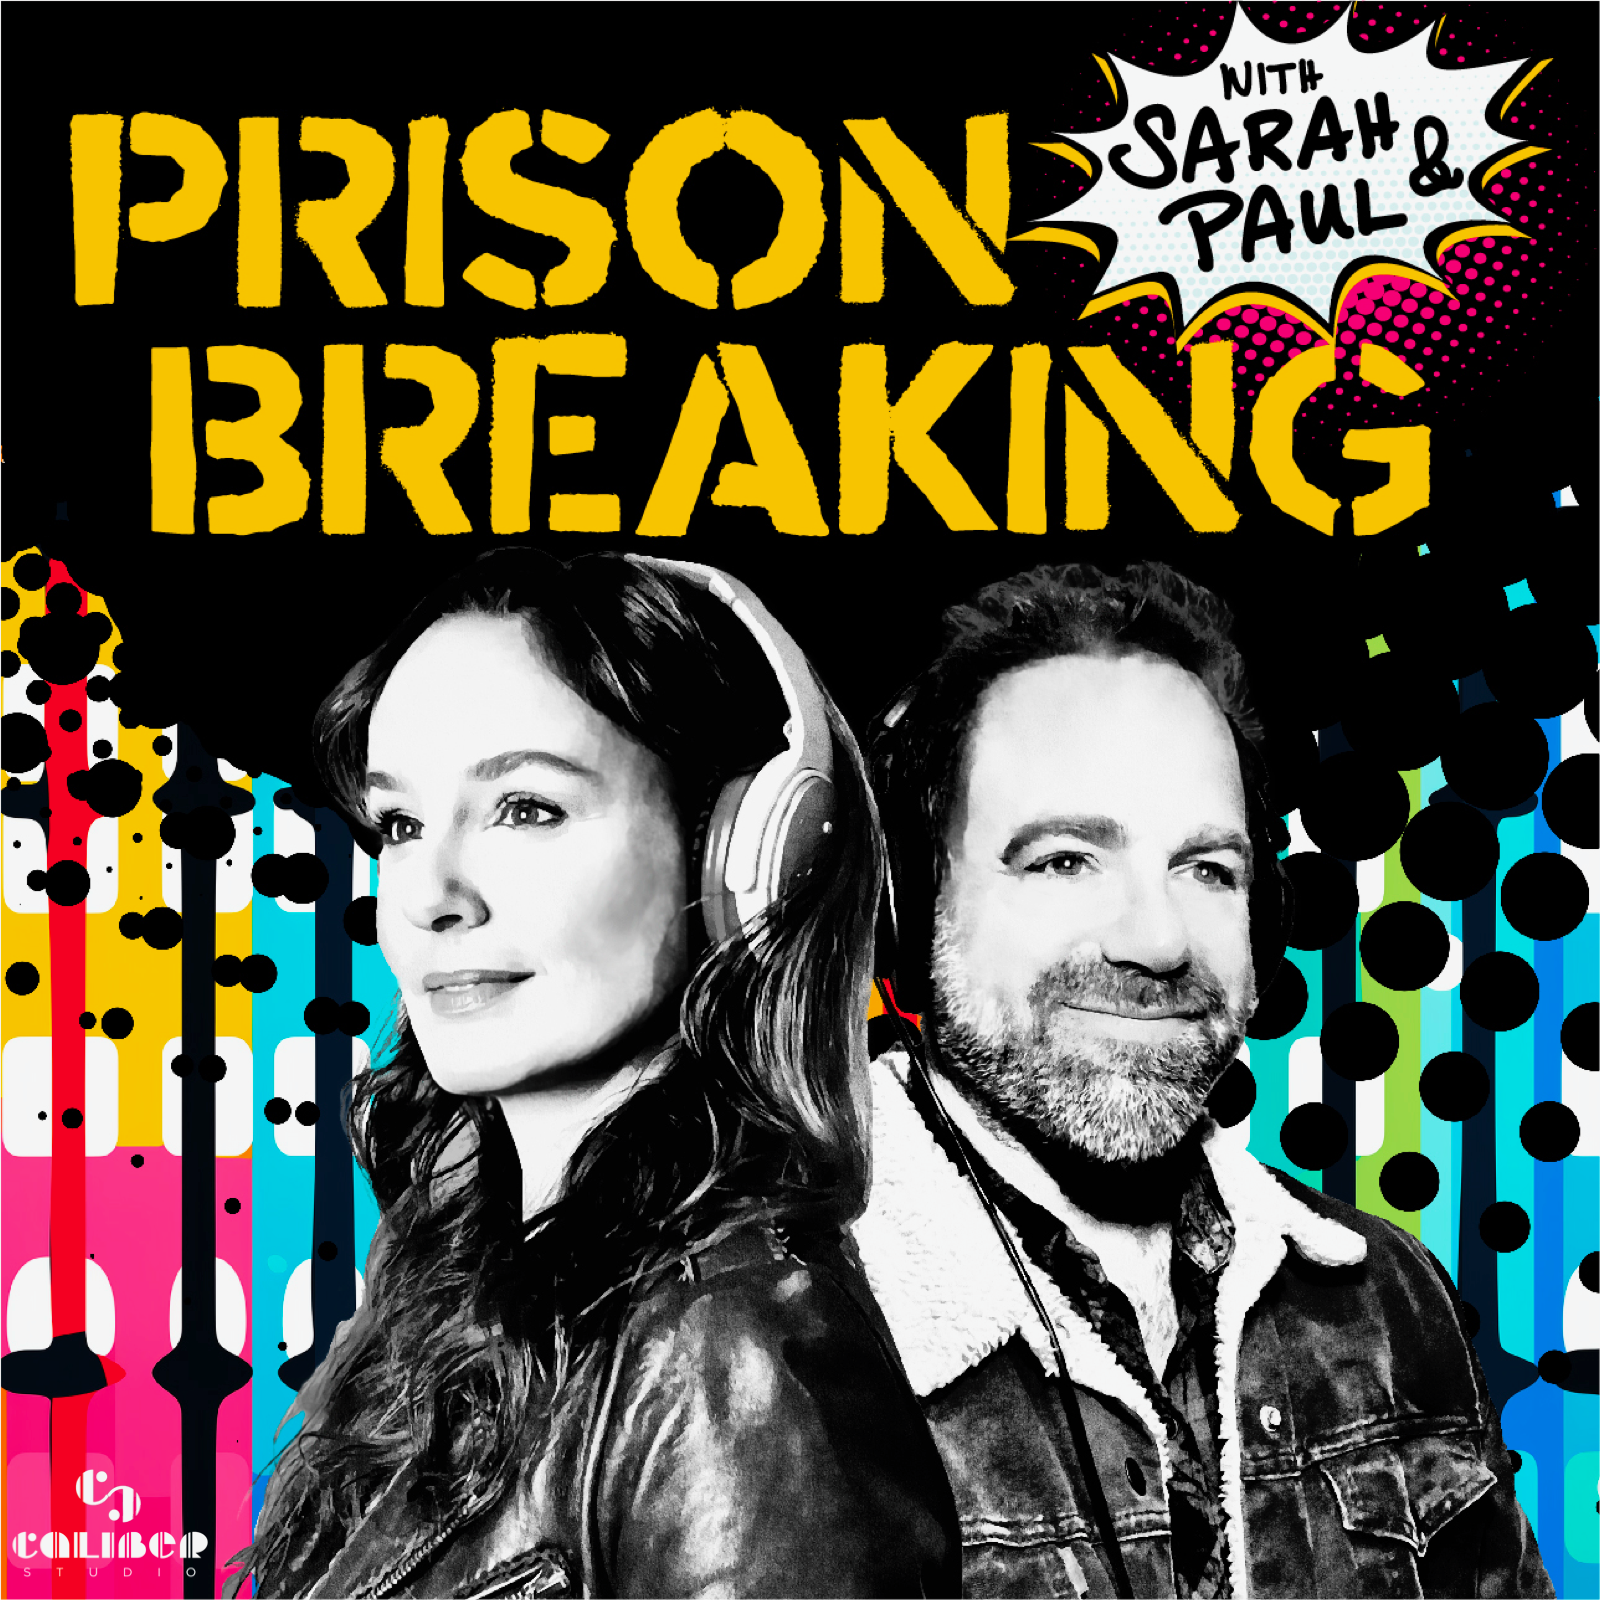 Prison Breaking With Sarah & Paul Image